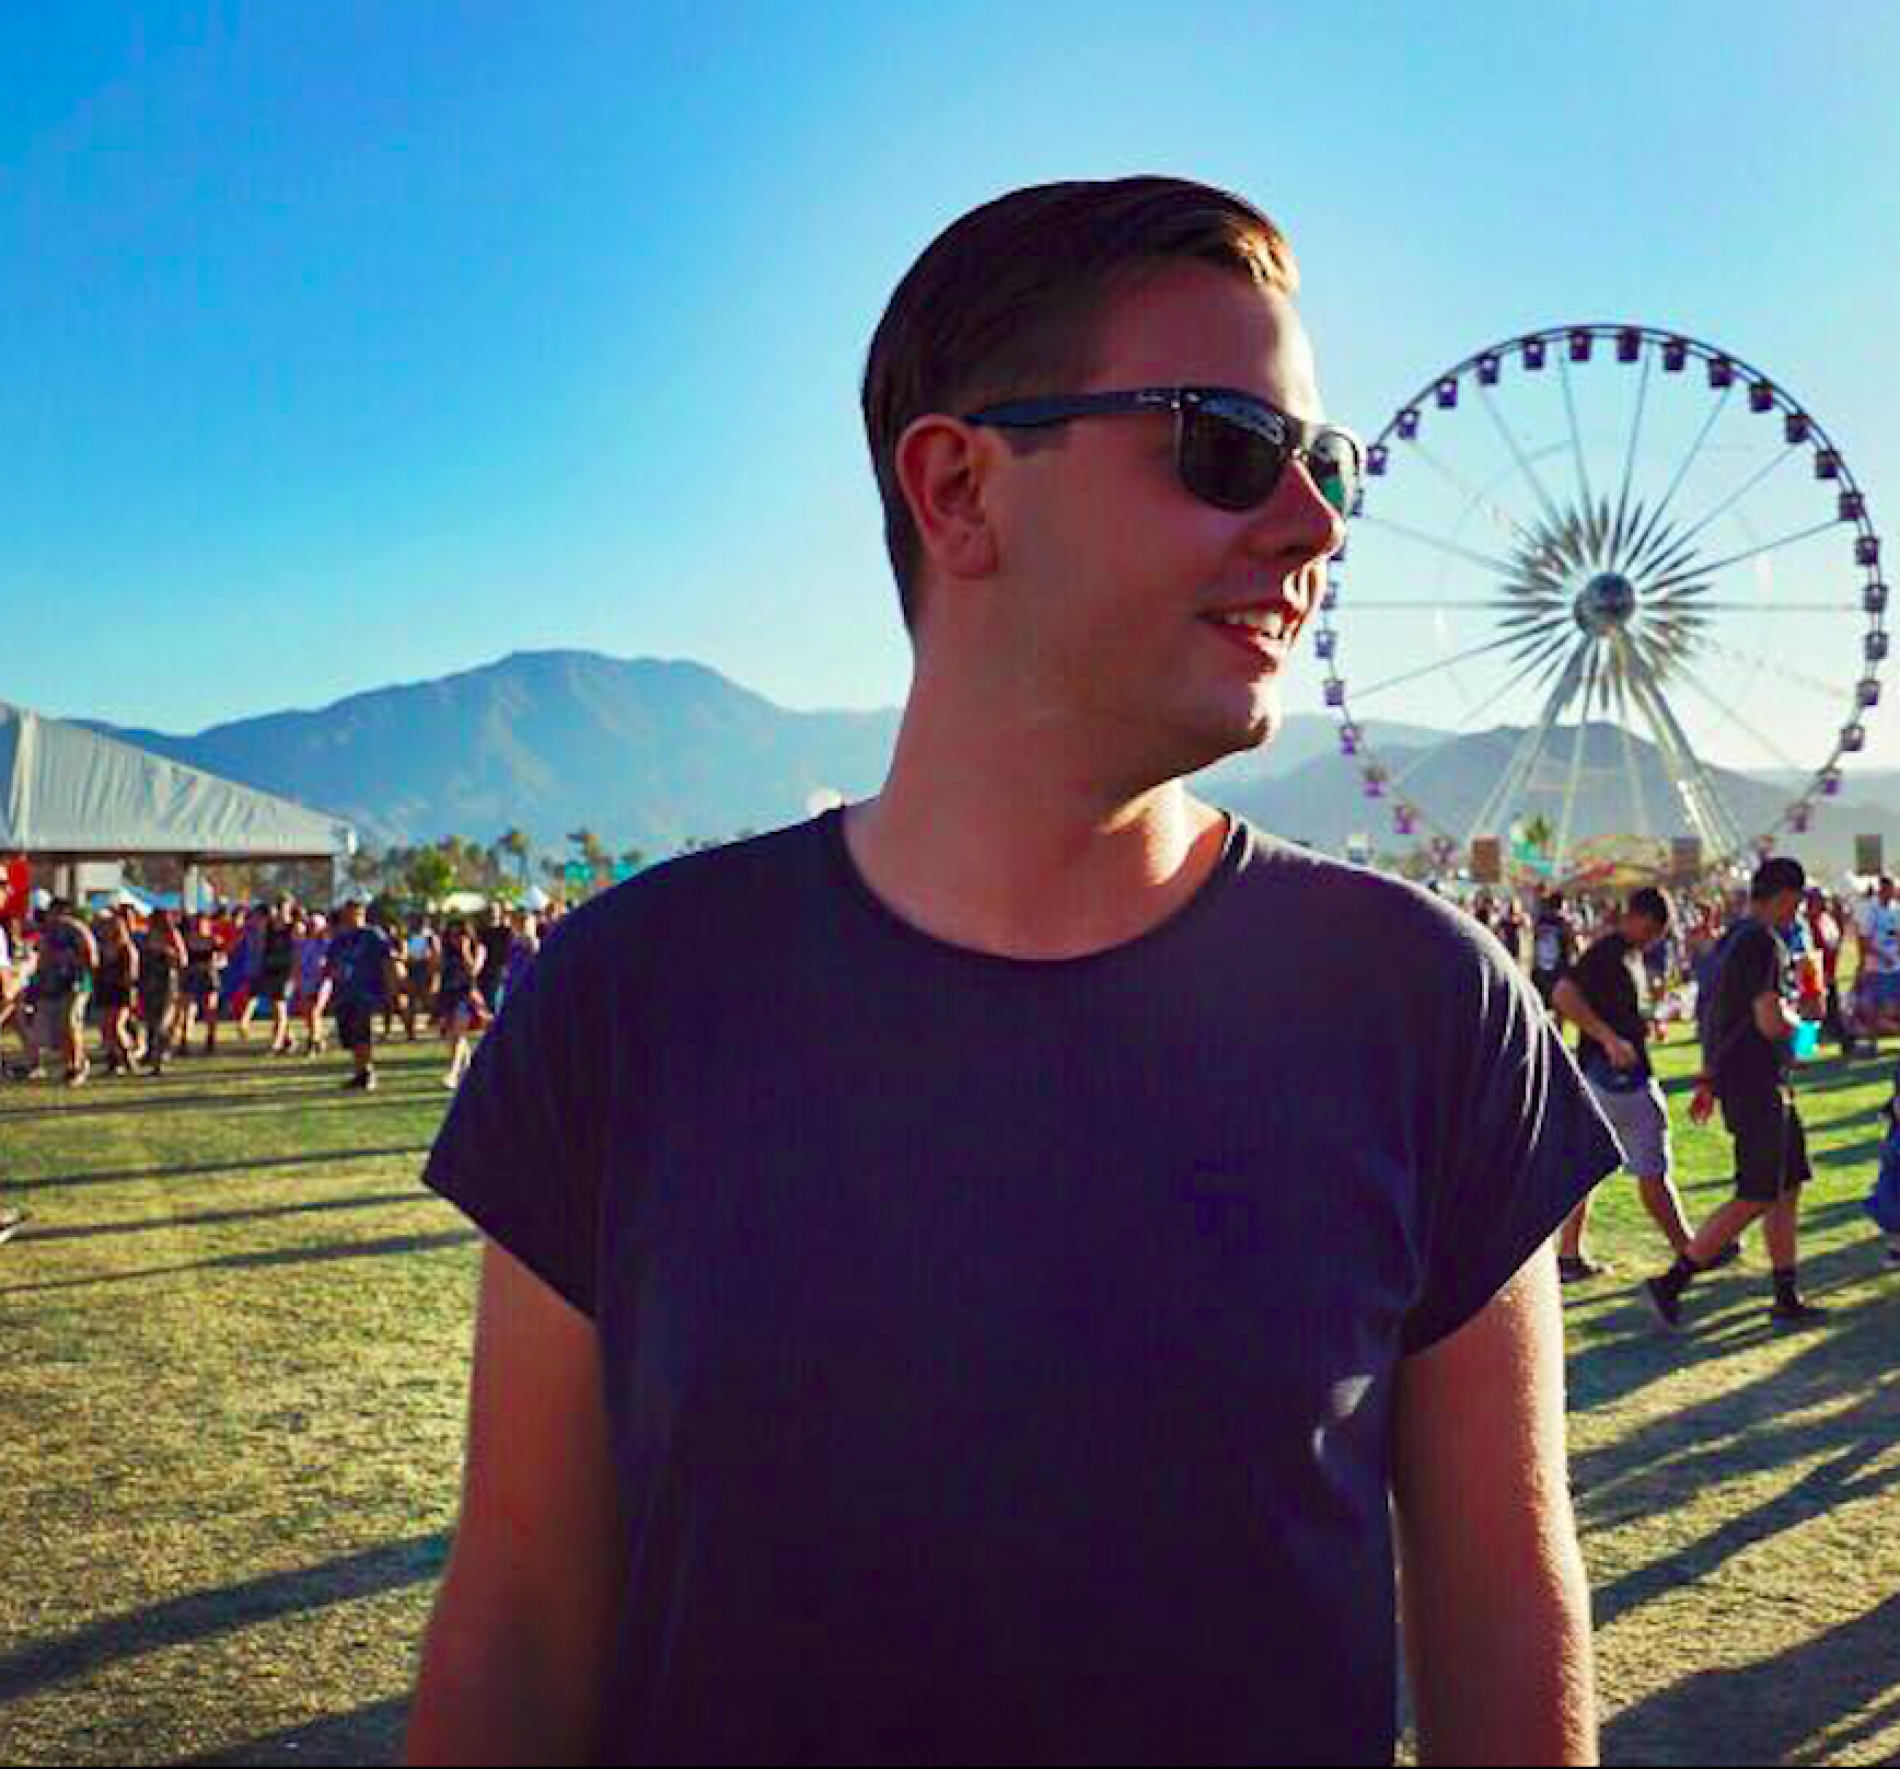 Listen to Sam Feldt's acclaimed Coachella set